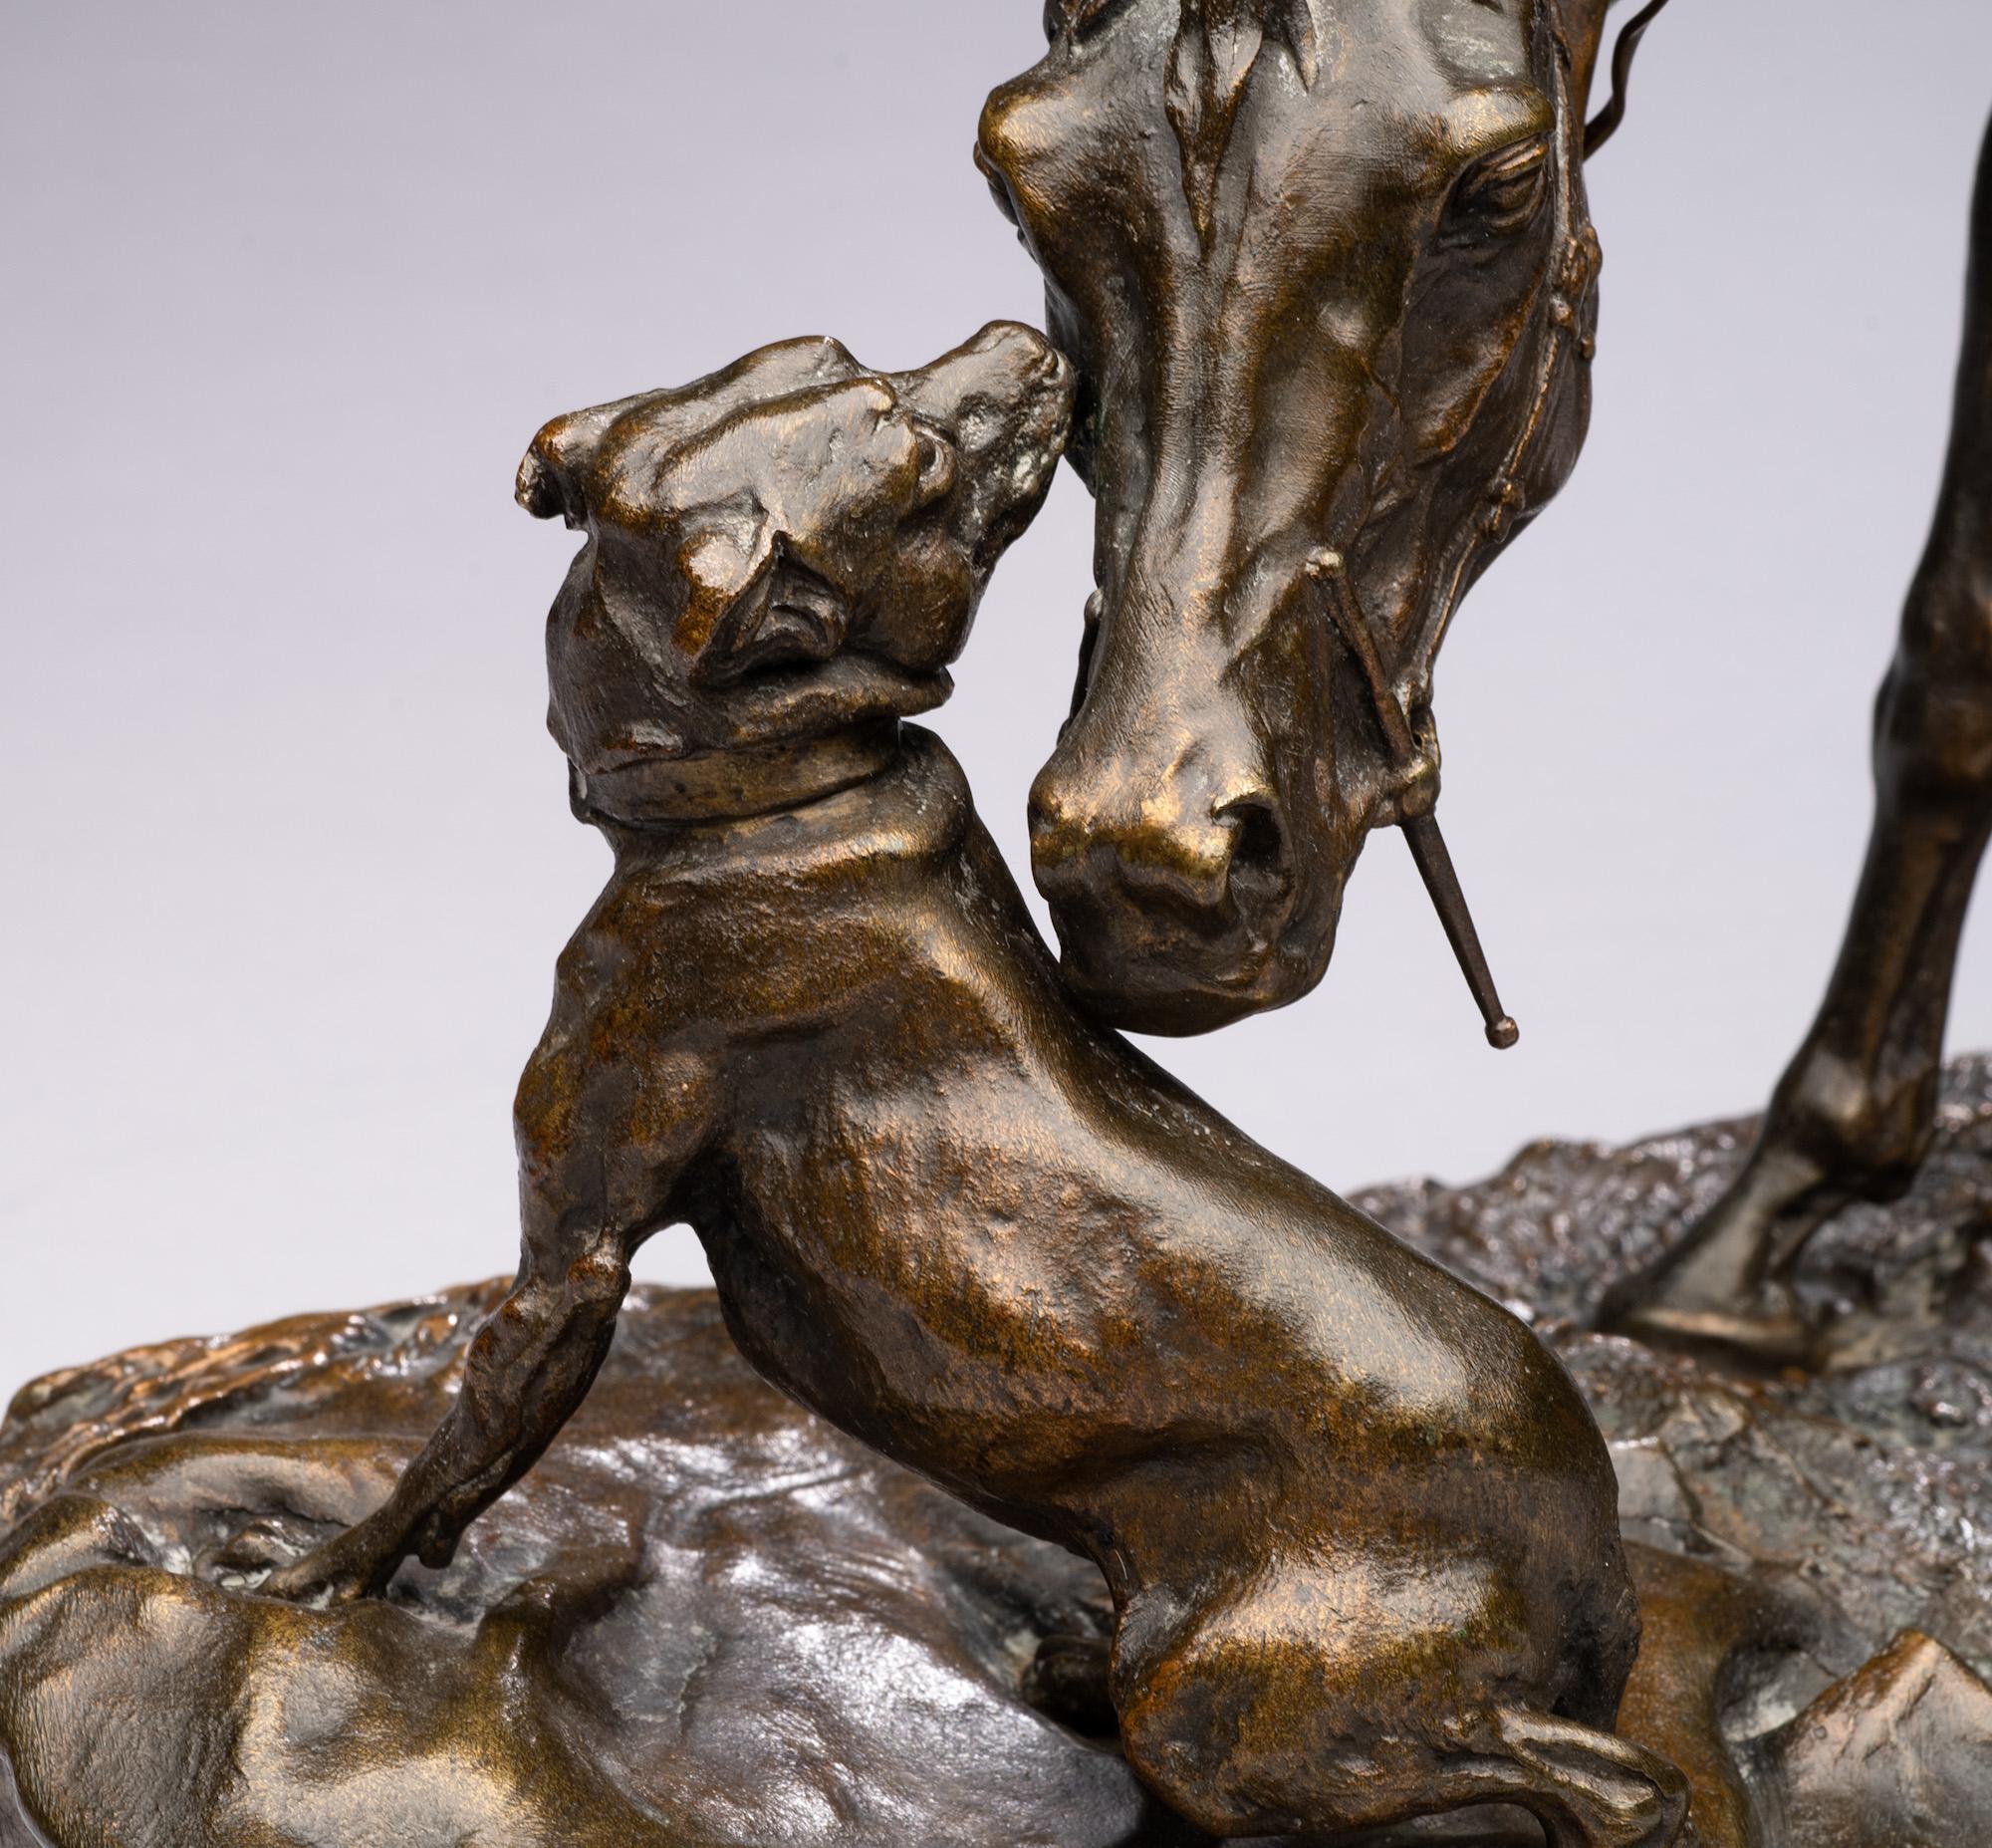 Antique : Mare Playing with a Terrier Dog (Good Companions) P. J. Mene 1860 - Sculpture de Pierre-Jules Mêne